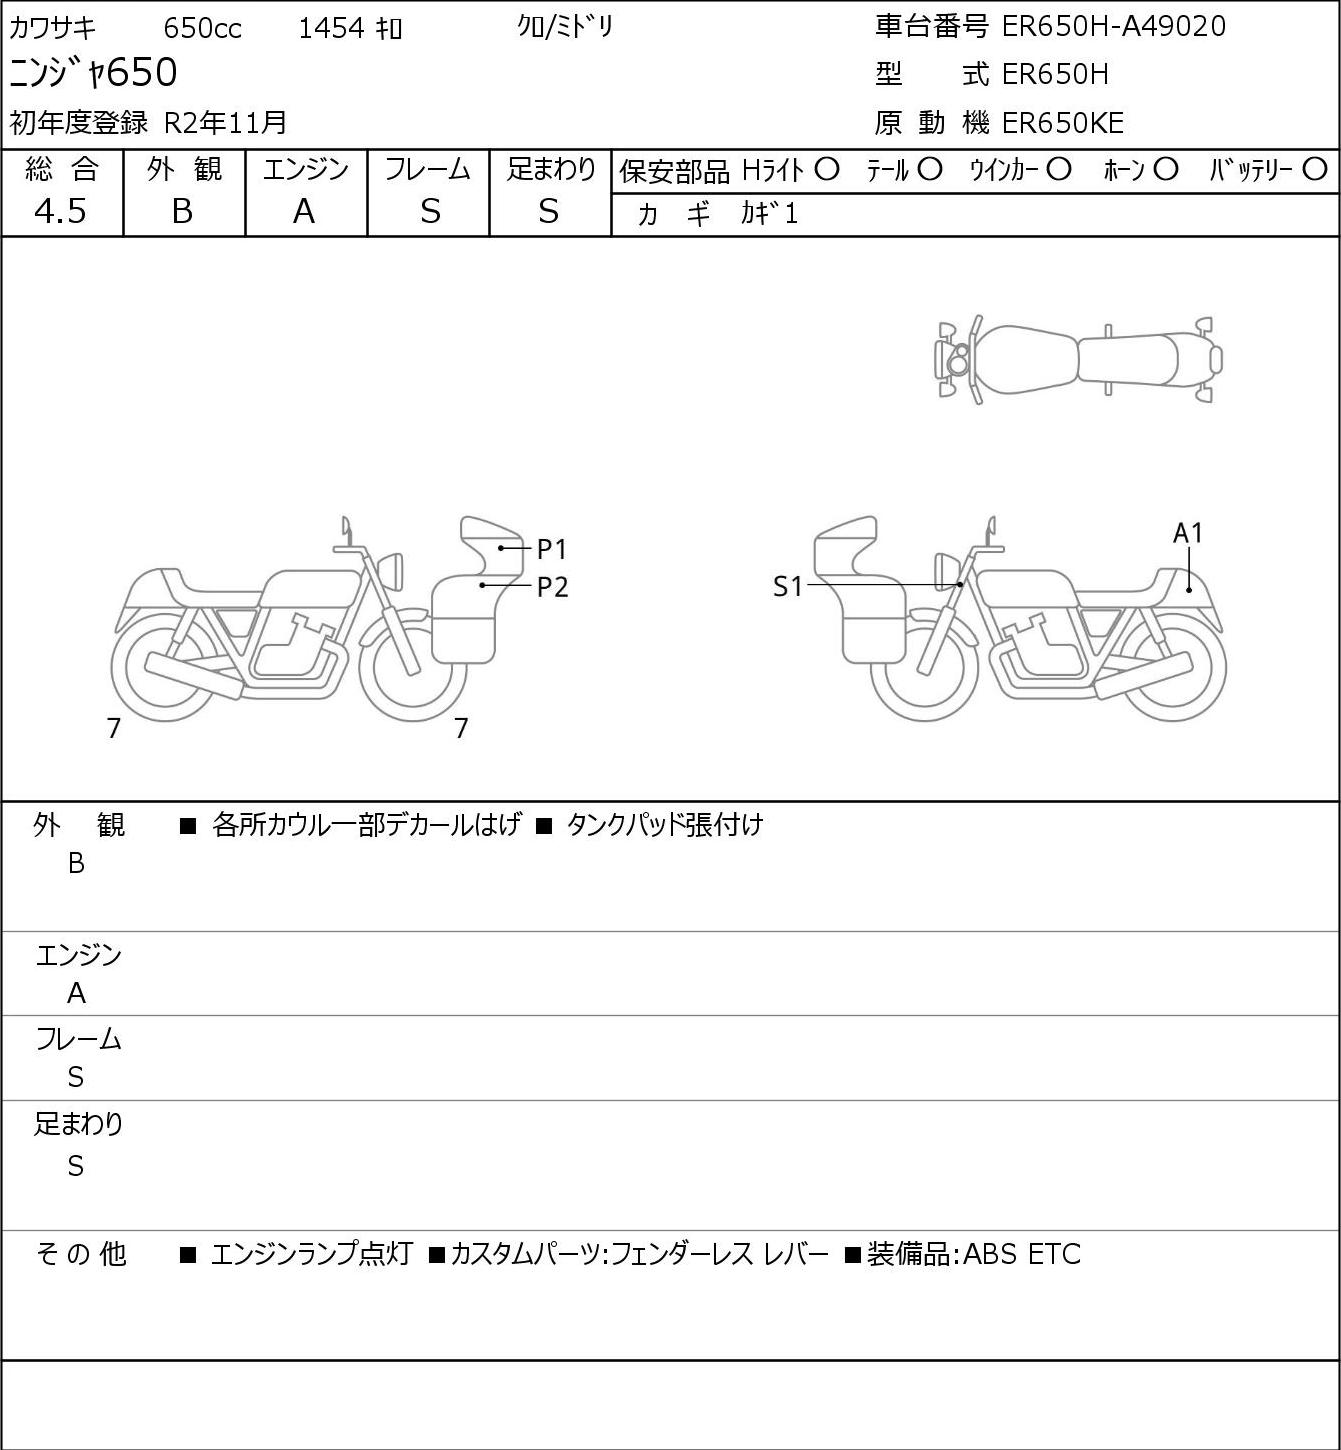 Kawasaki NINJA 650 ER650H - купить недорого